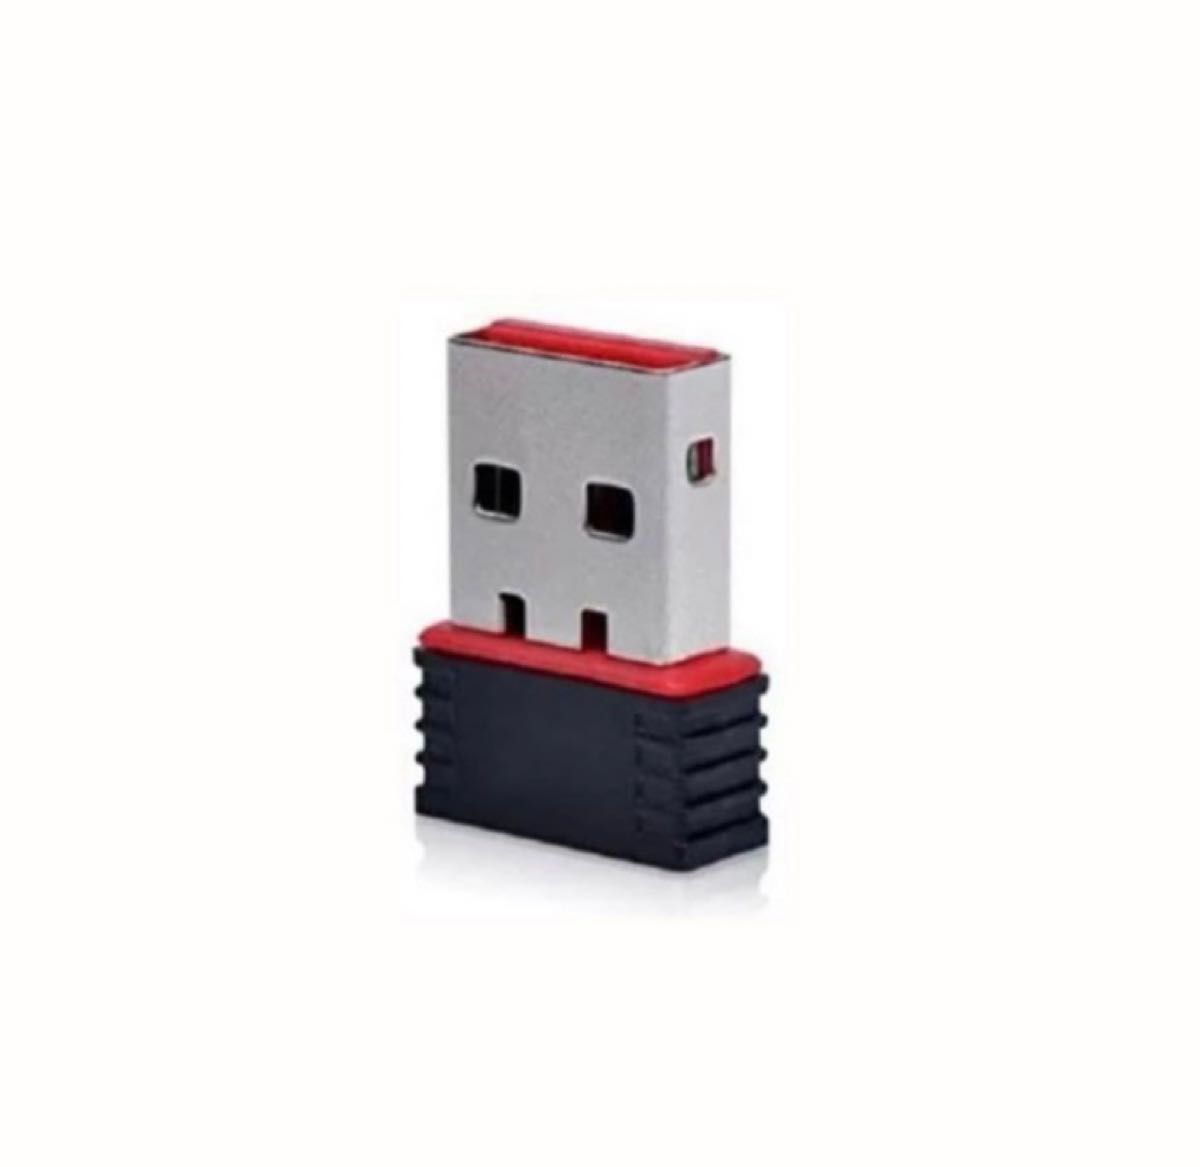 【１０個】超小型 USBWiFi子機 USB 無線LAN wifi 受信機 無線LAN子機 IEEE802.11n USBアダプタ